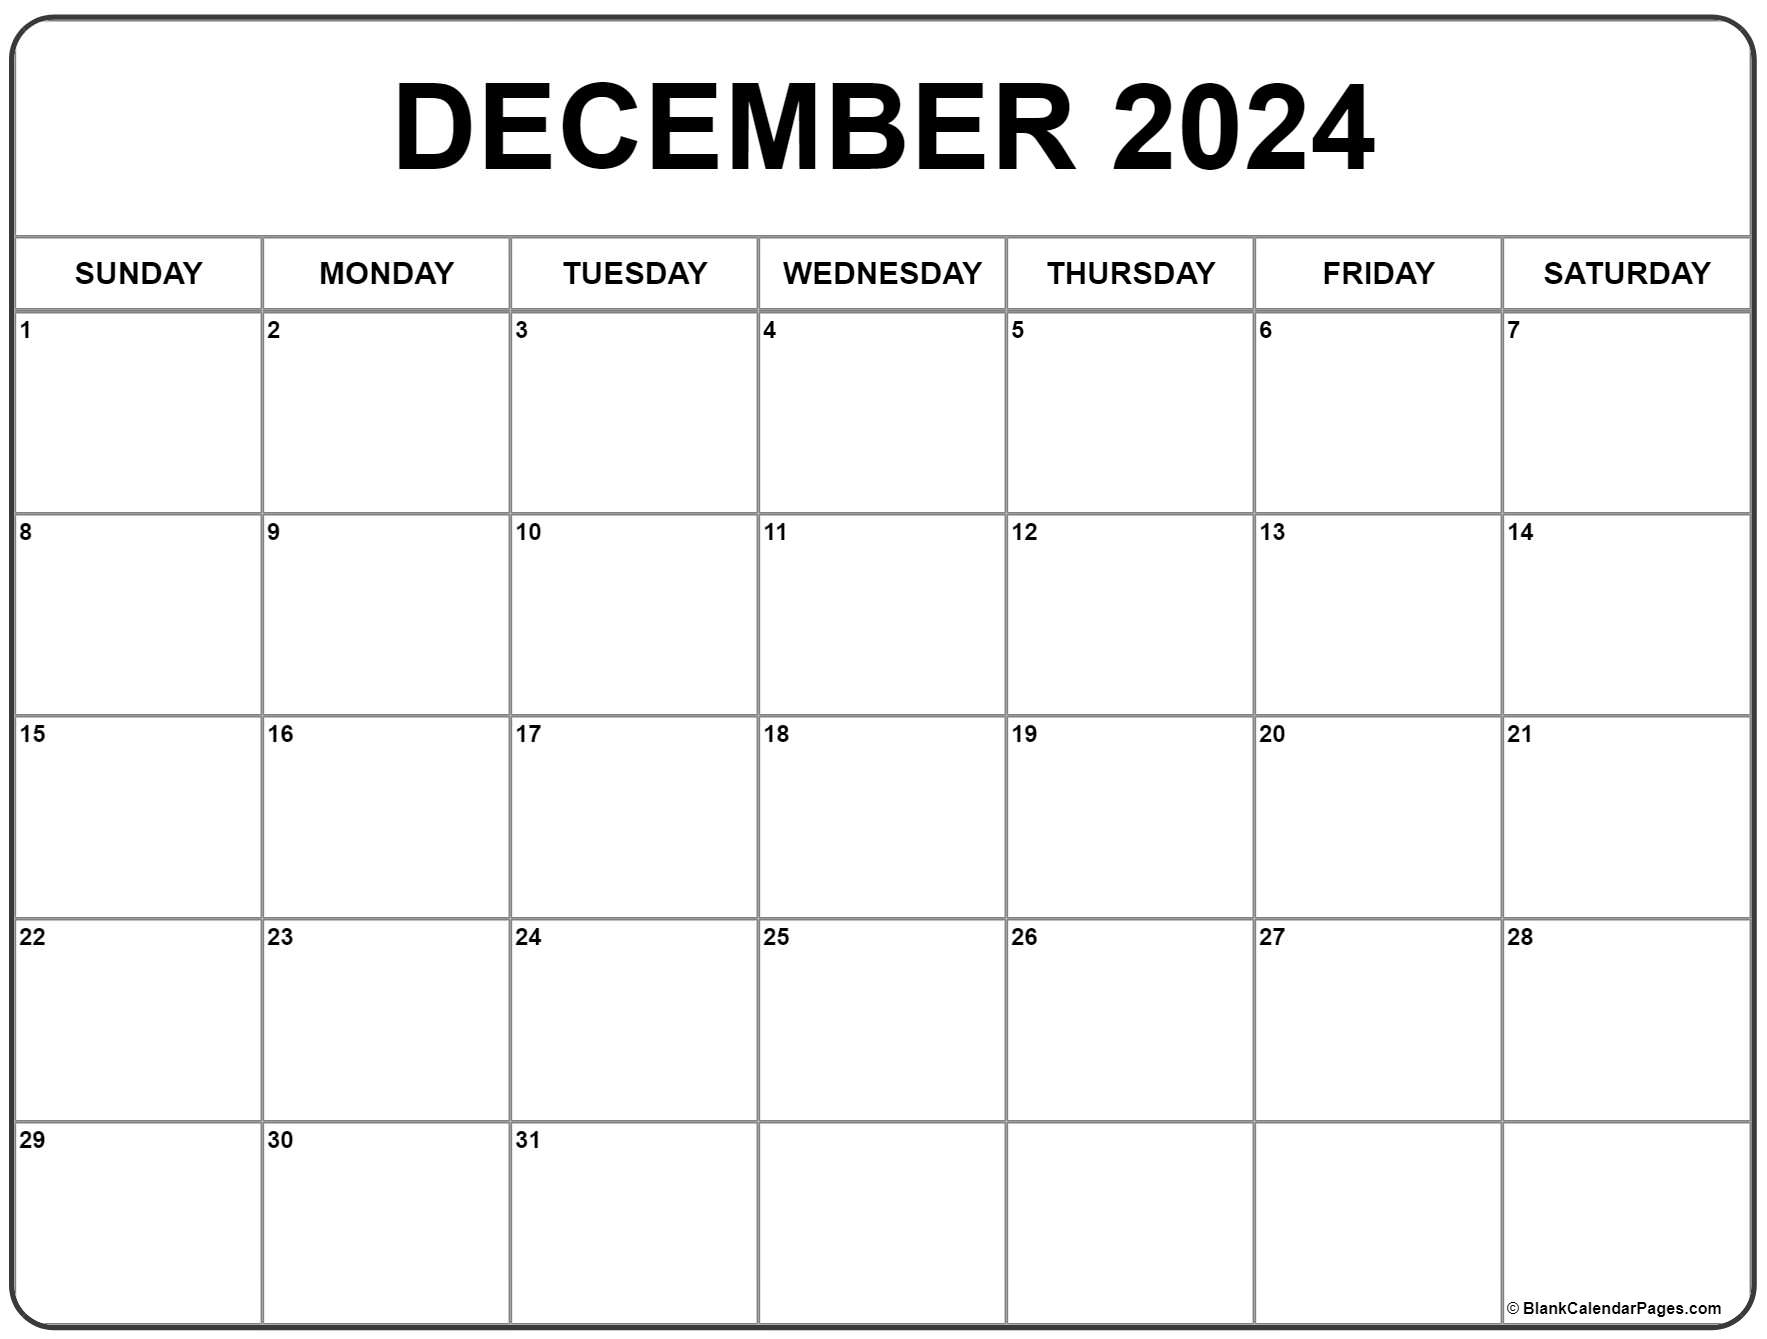 December 2024 Calendar | Free Printable Calendar pertaining to Free Printable Blank December Calendar 2024